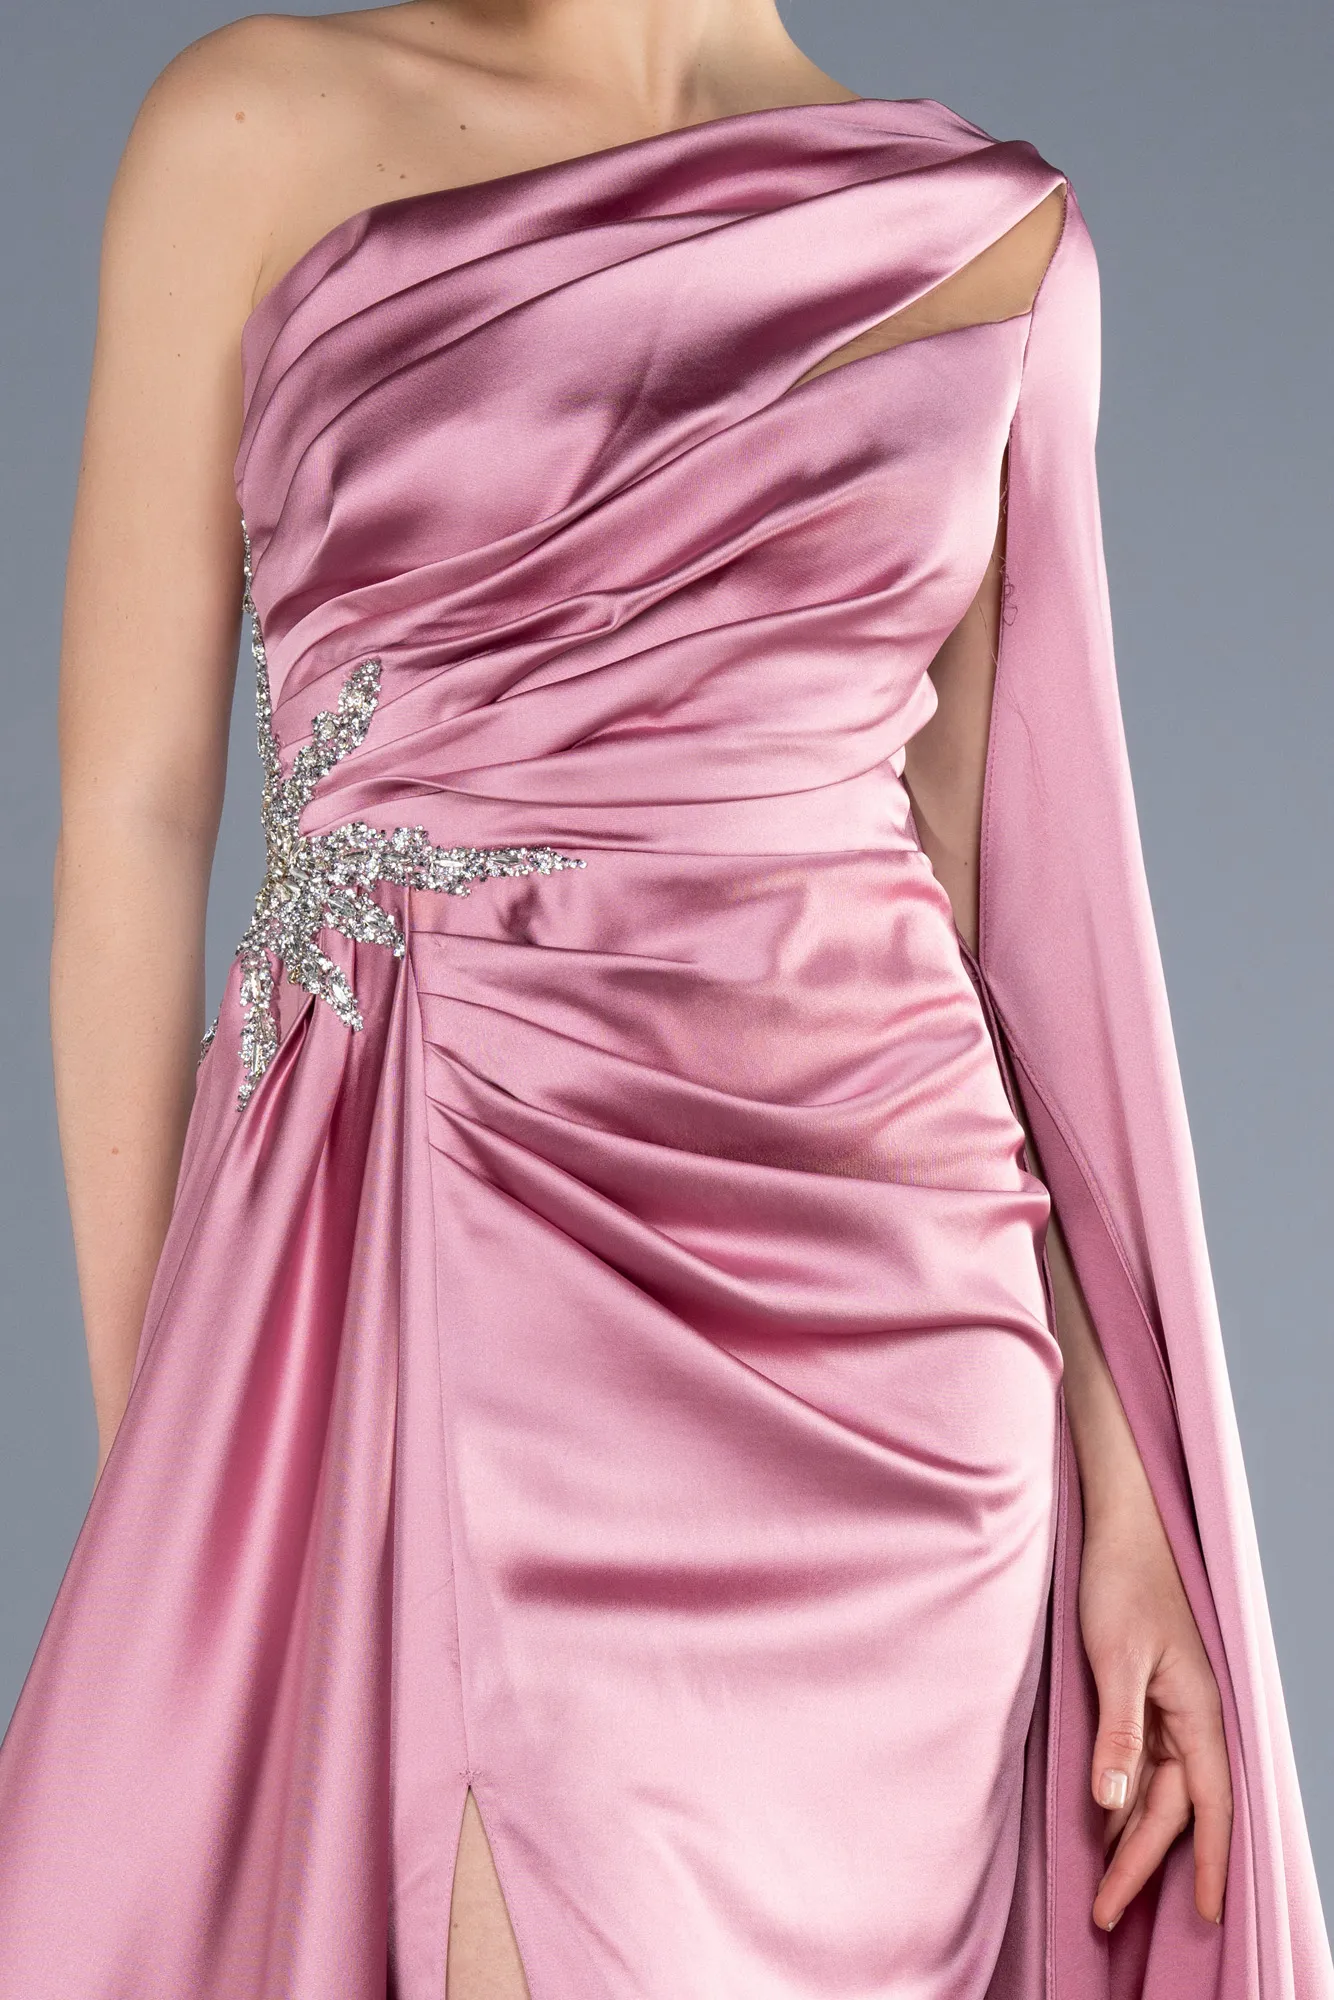 Rose Colored-Long Satin Evening Dress ABU3545